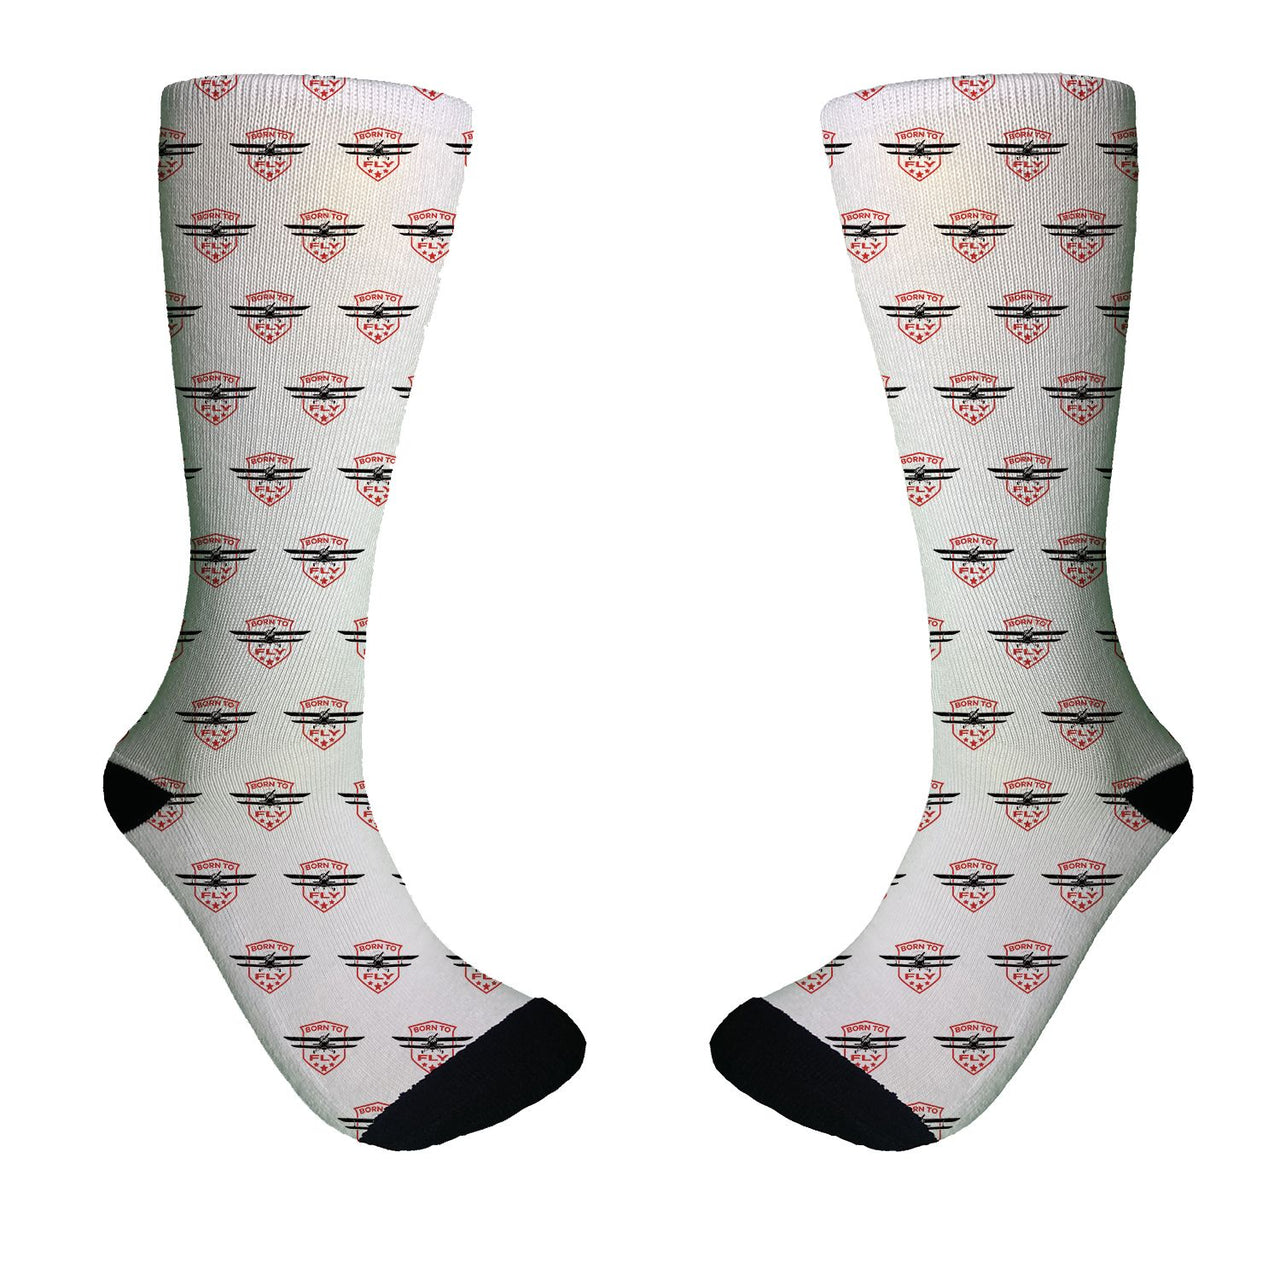 Super Born To Fly Designed Socks